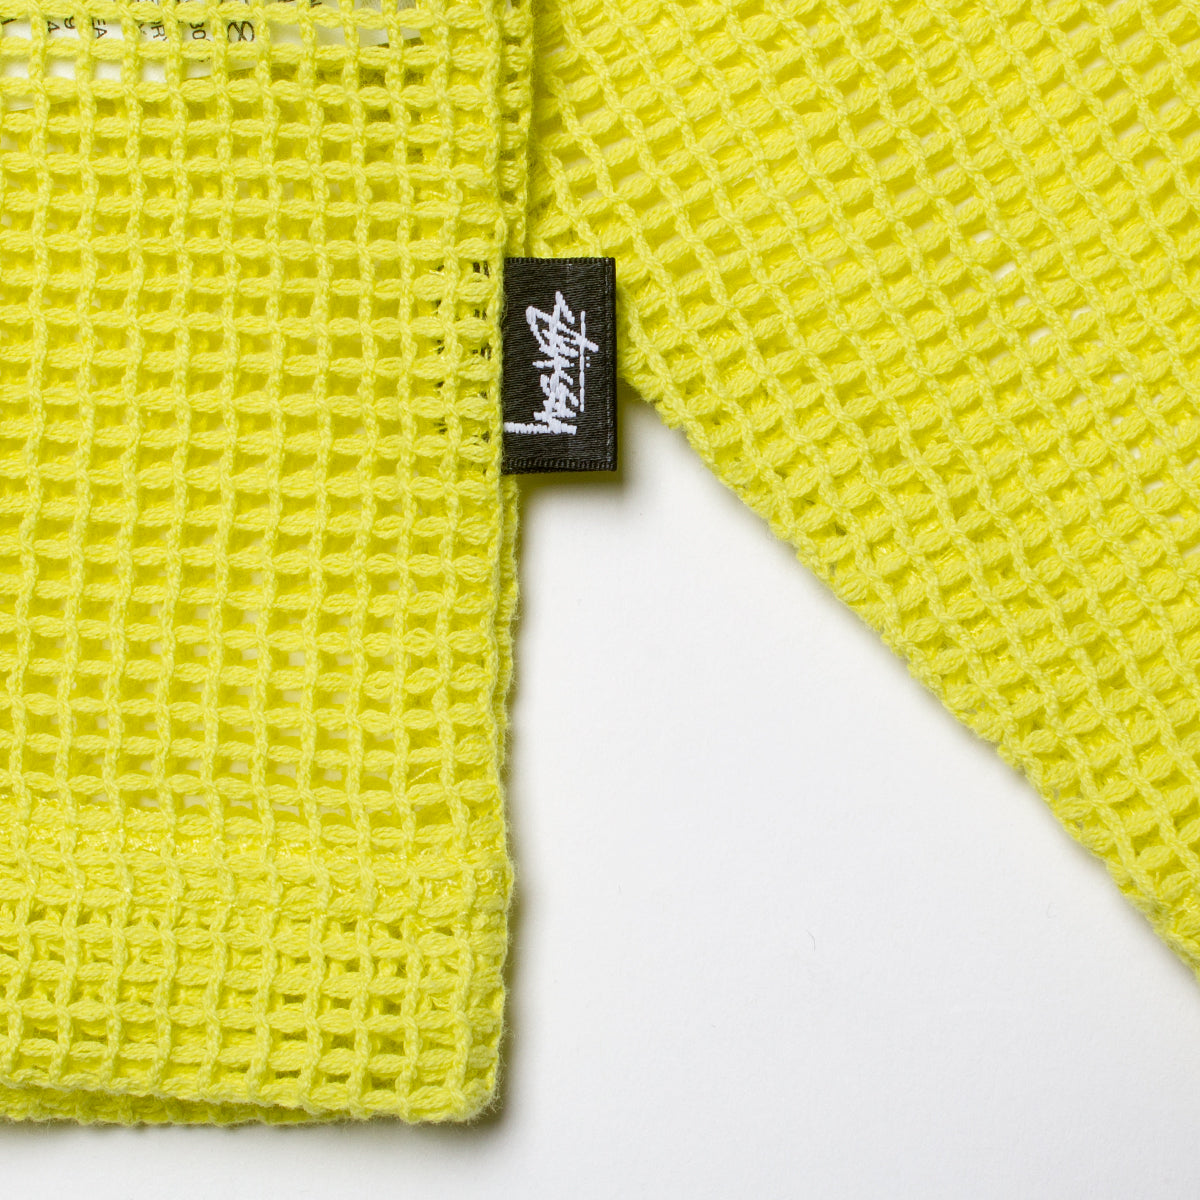 Mesh Fabric · King Textiles